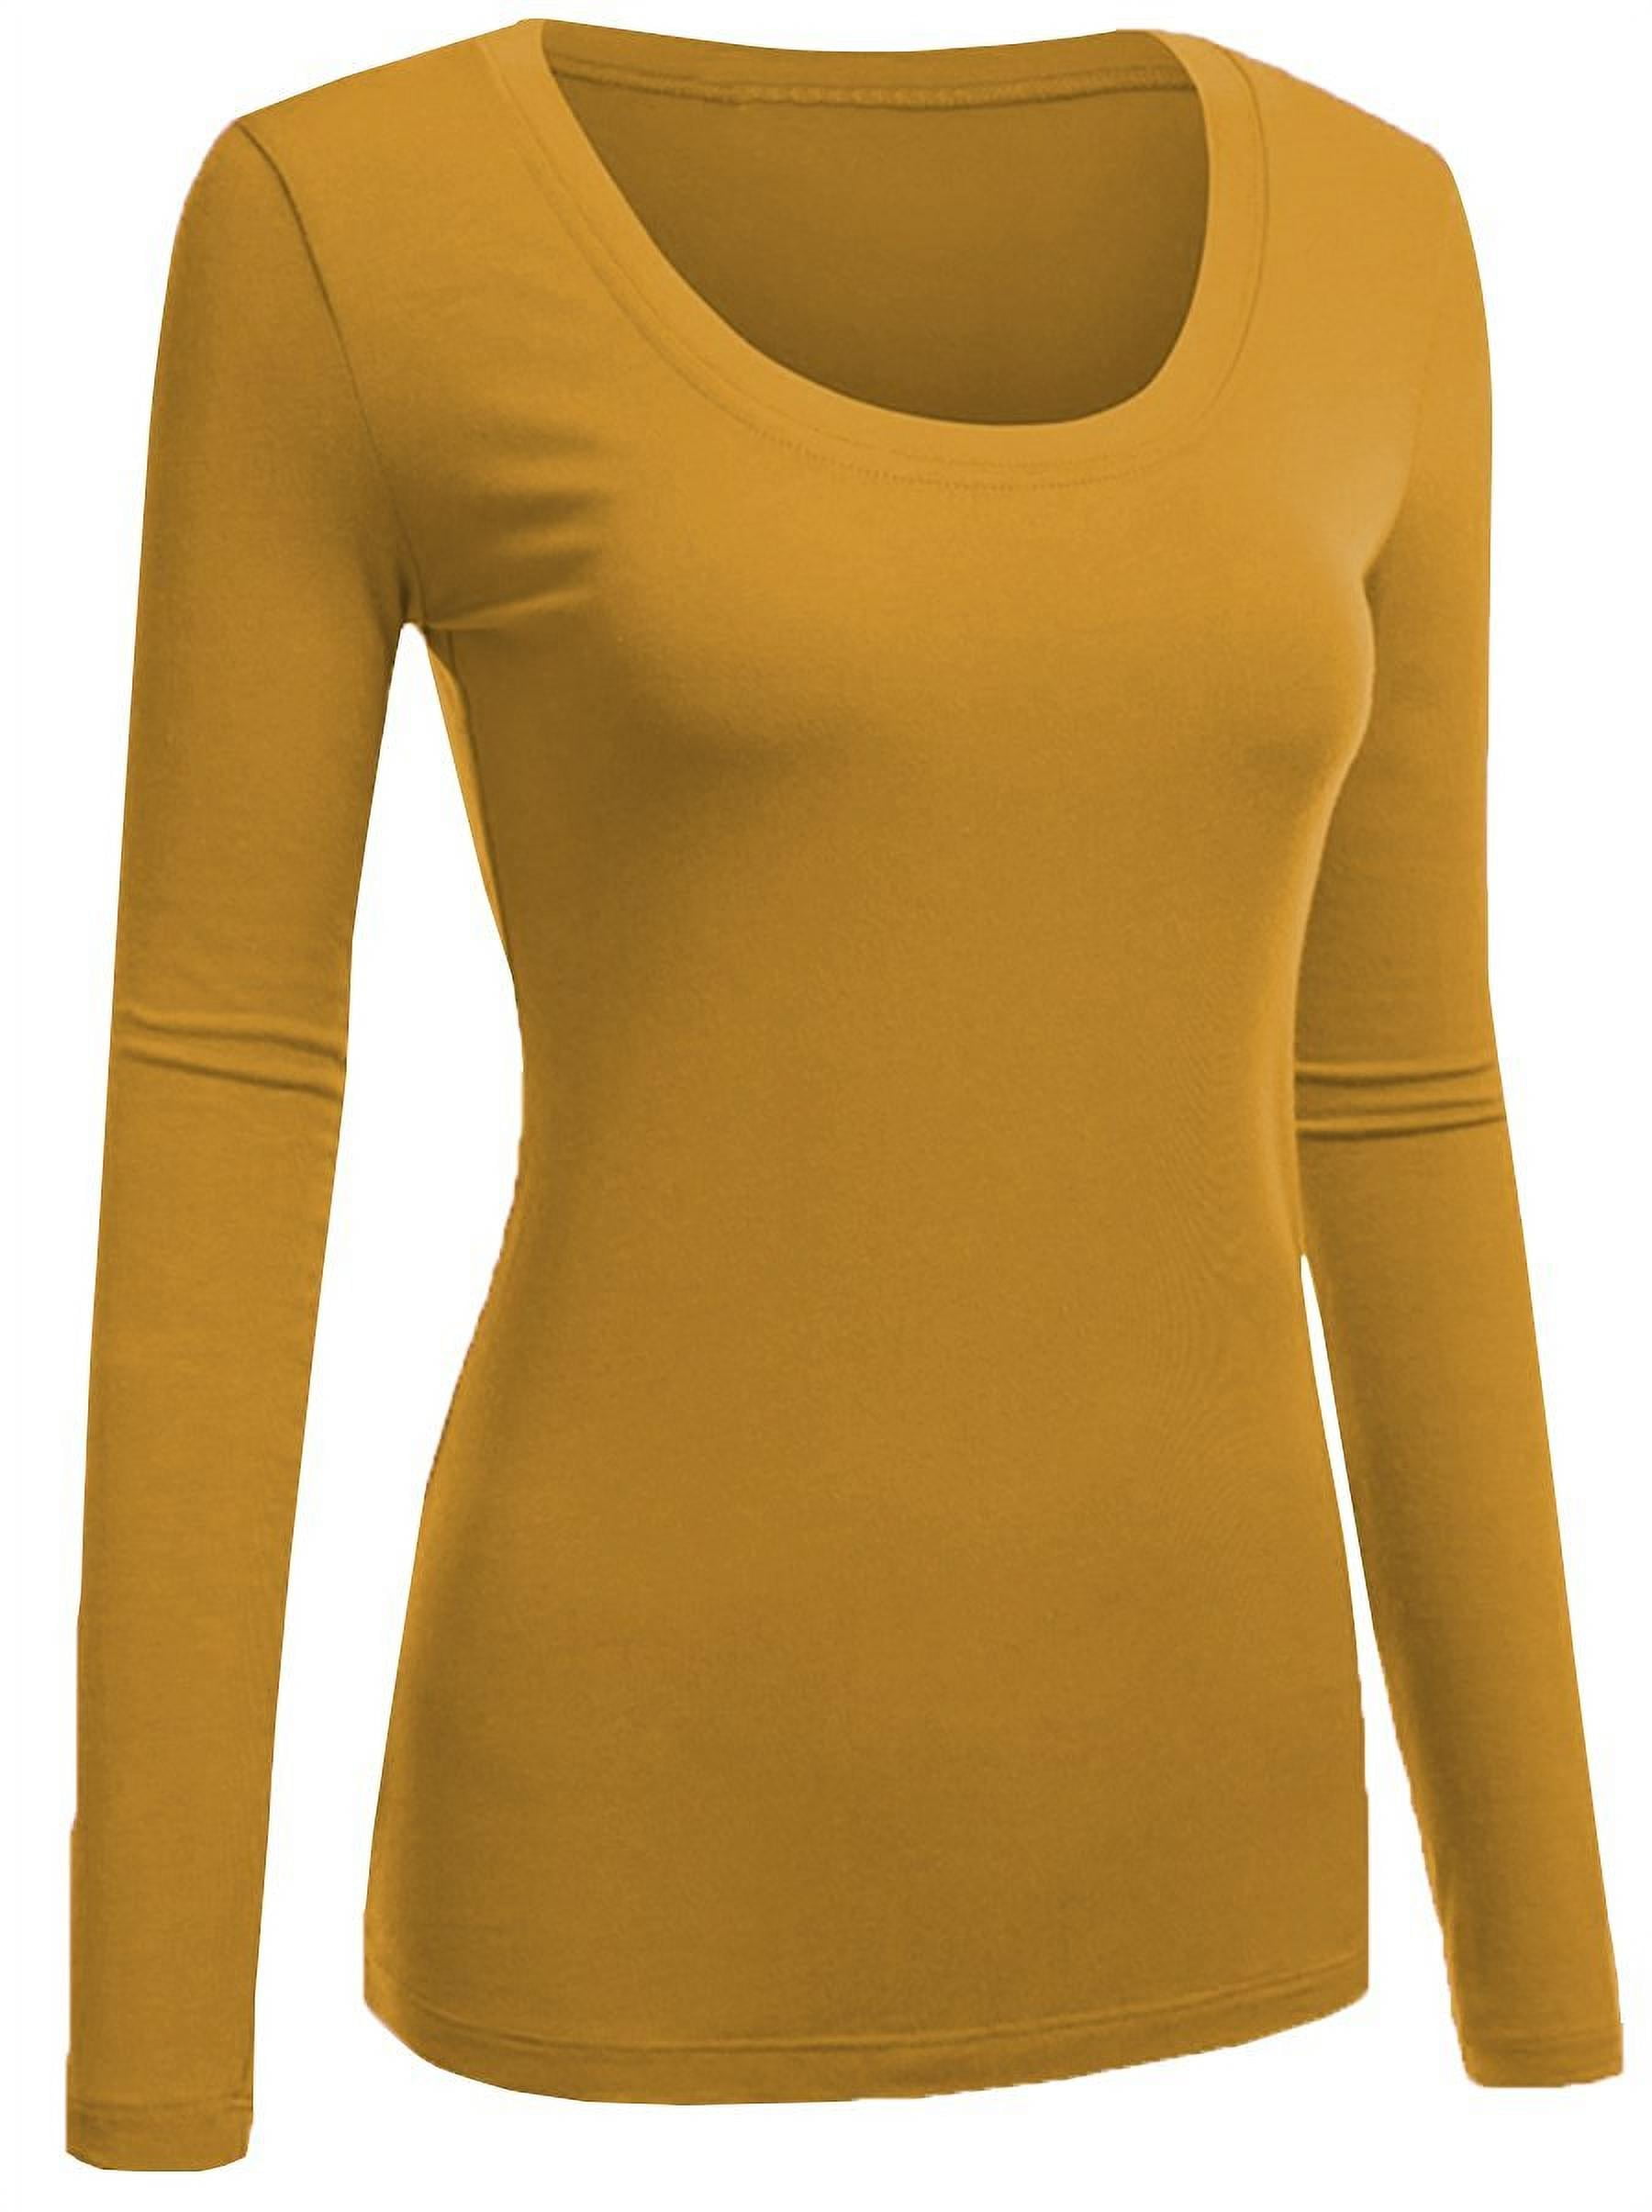 Emmalise Women's Plain Basic Scoop Neck Long Sleeve TShirt Tee - Rust, M -  Walmart.com